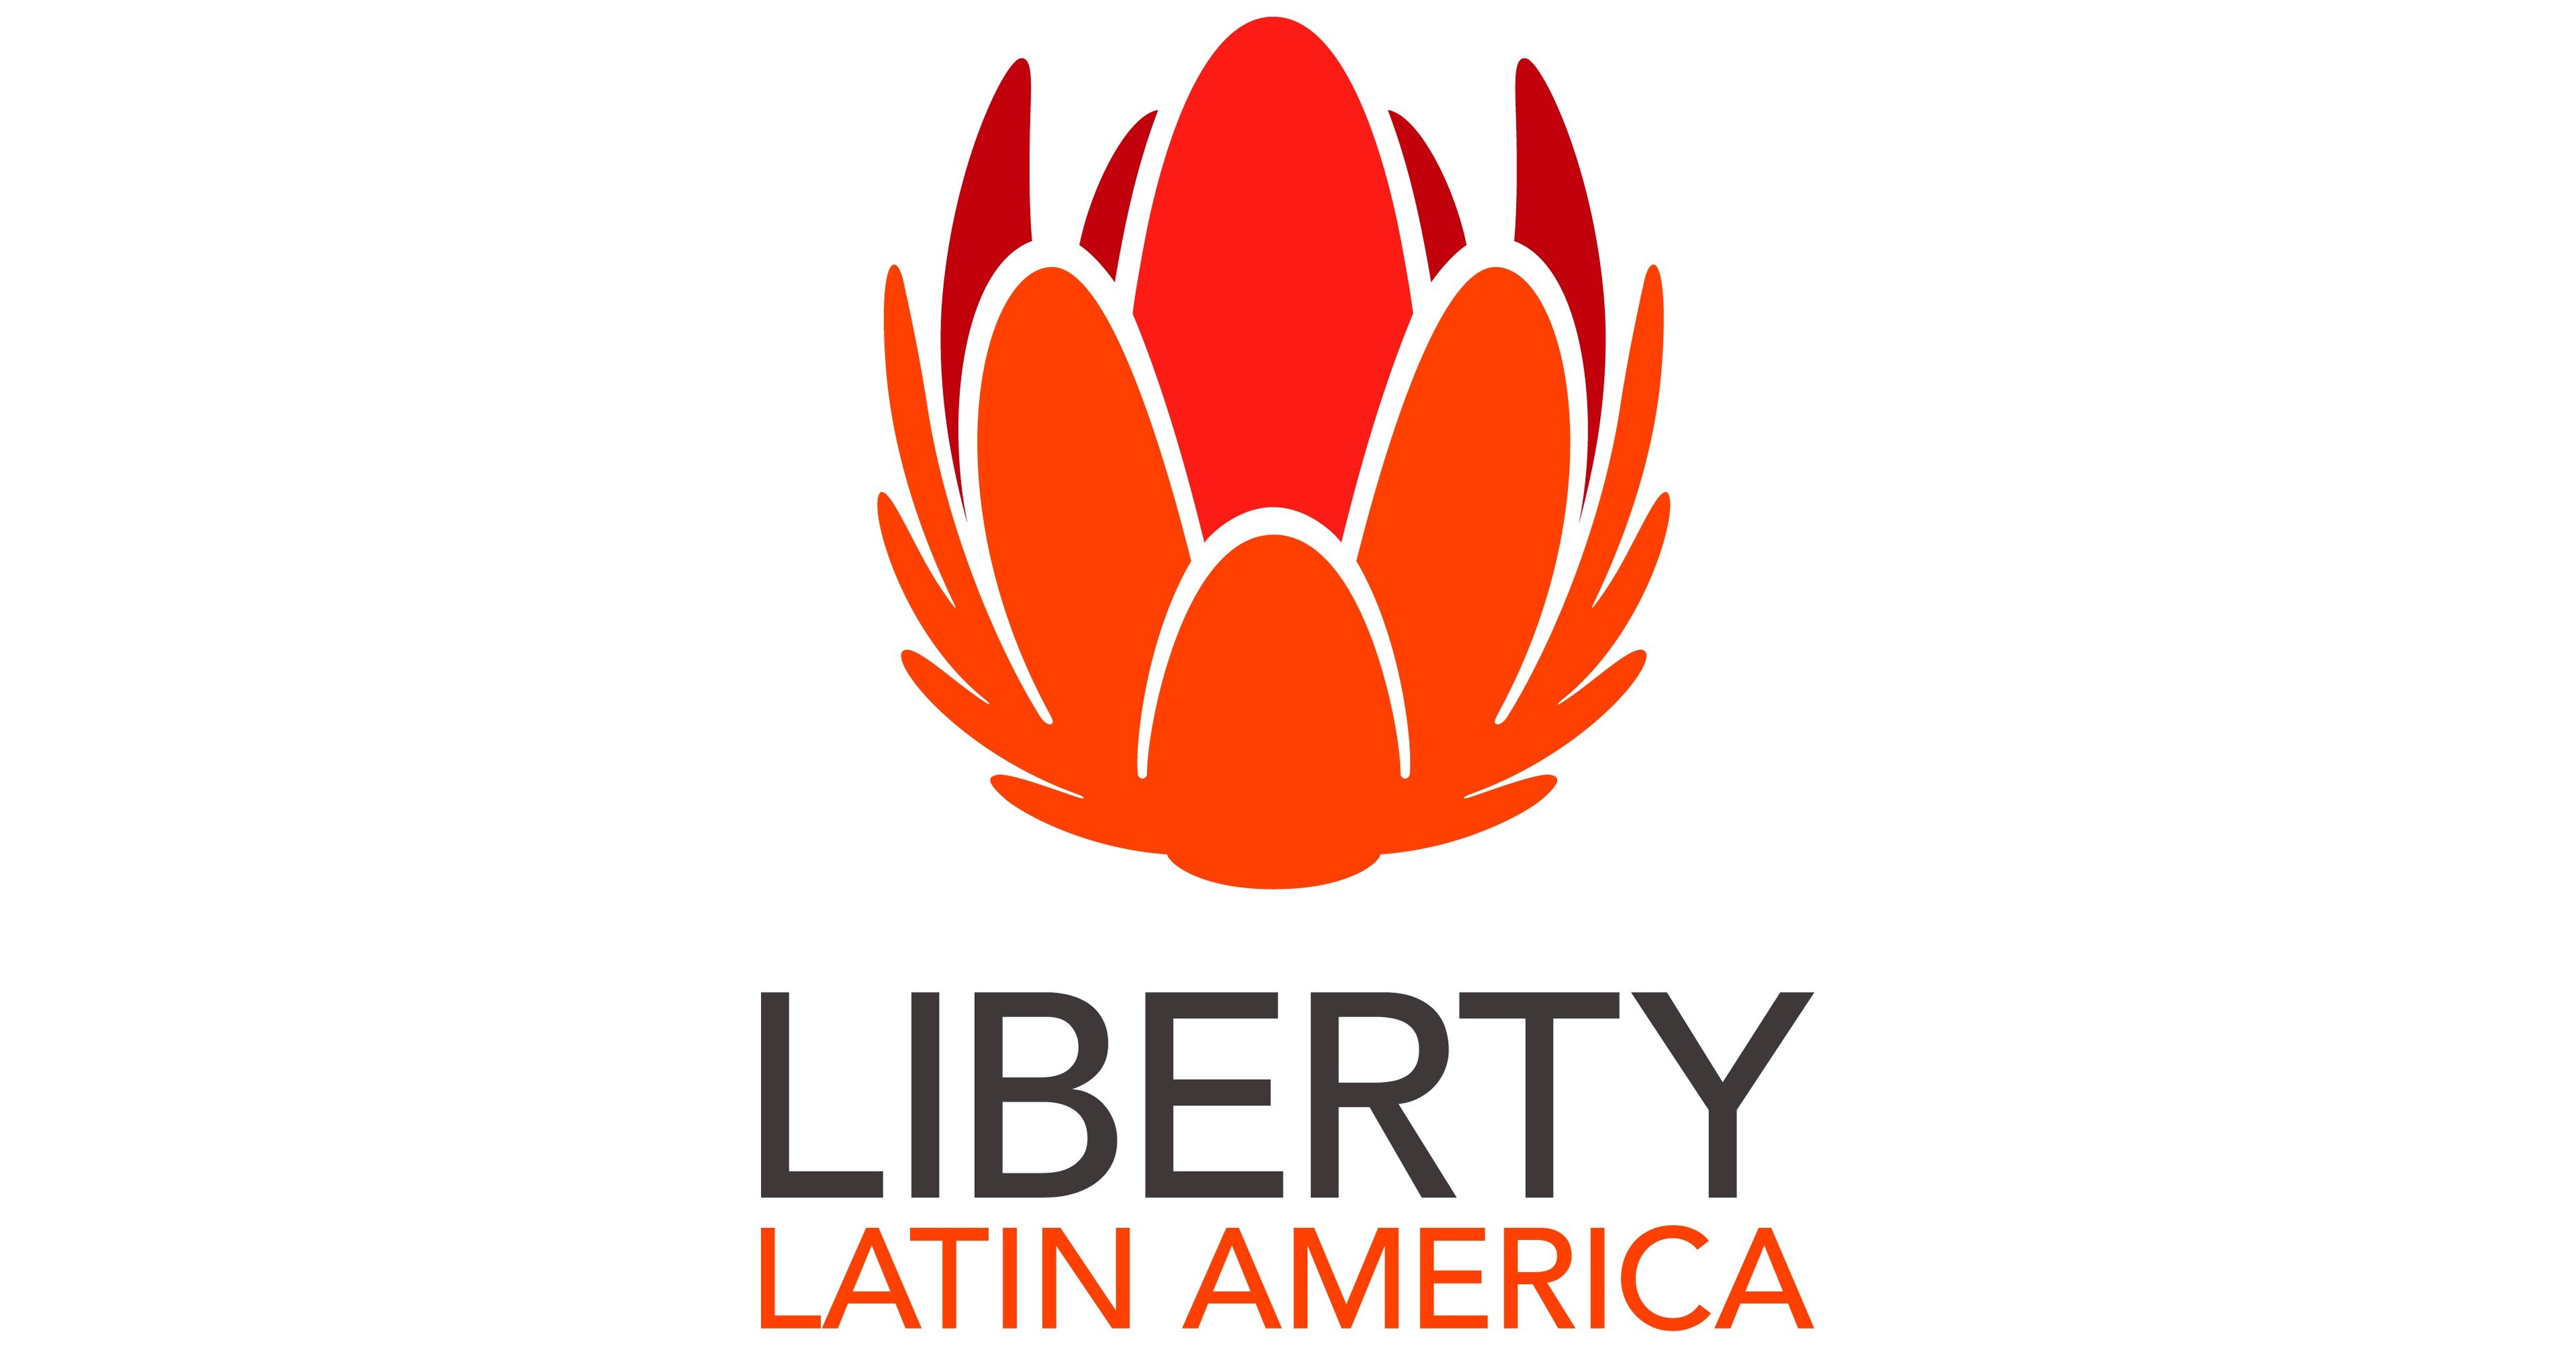 Liberty Latin America se asocia con Plume para brindar servicios de hogar inteligente de próxima generación en Puerto Rico